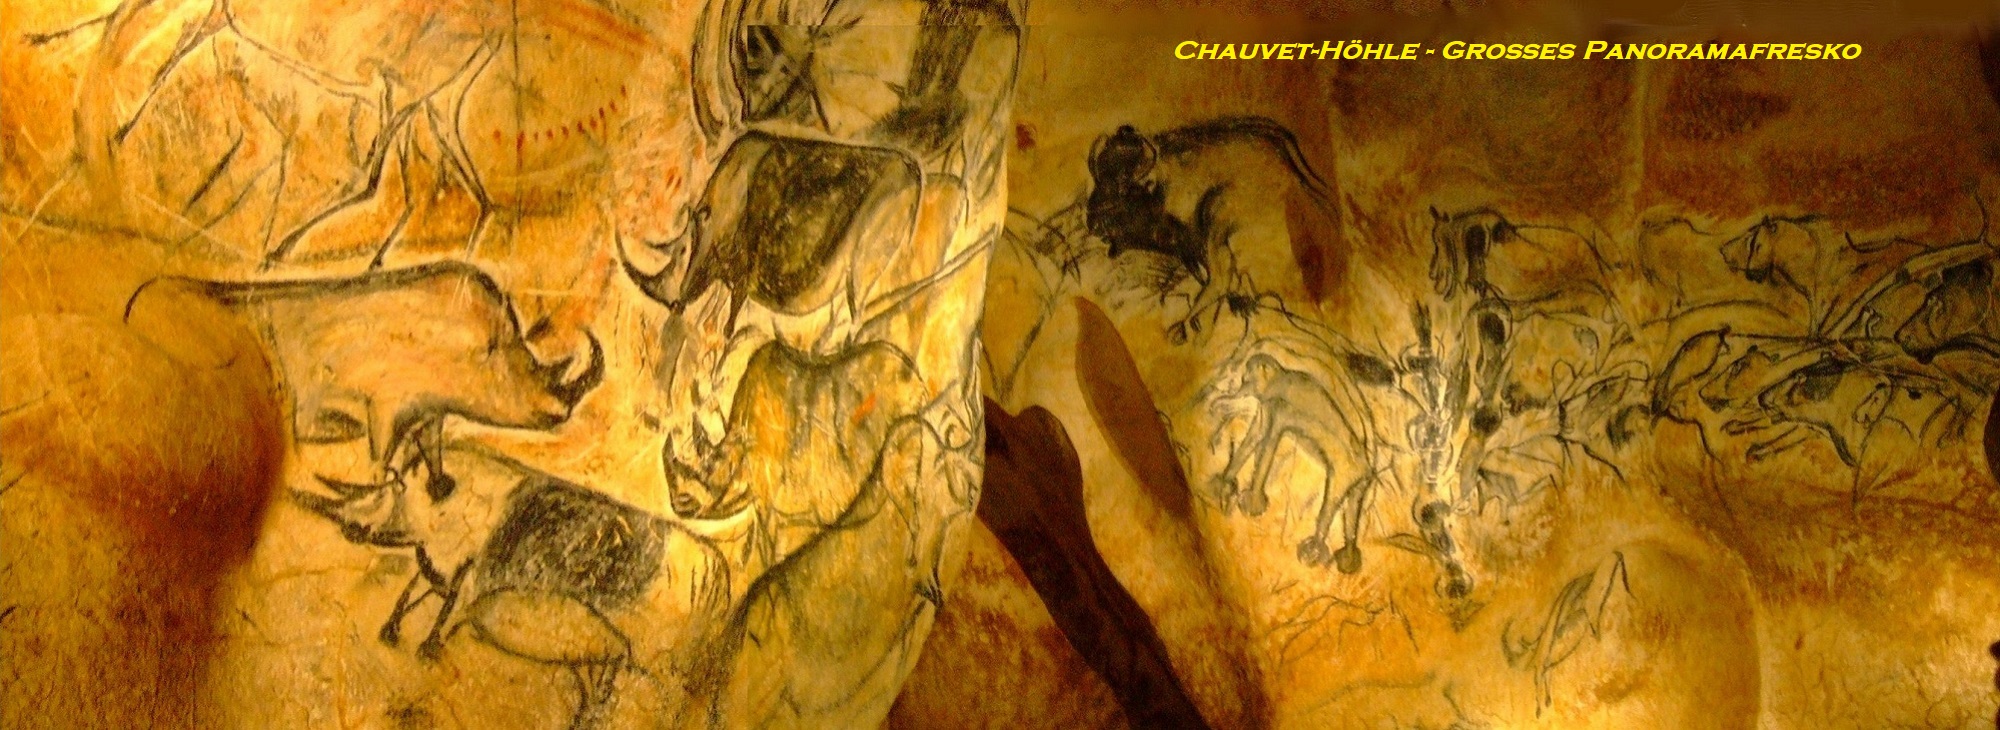 Chauvet-Höhle - Großes Panoramafresko